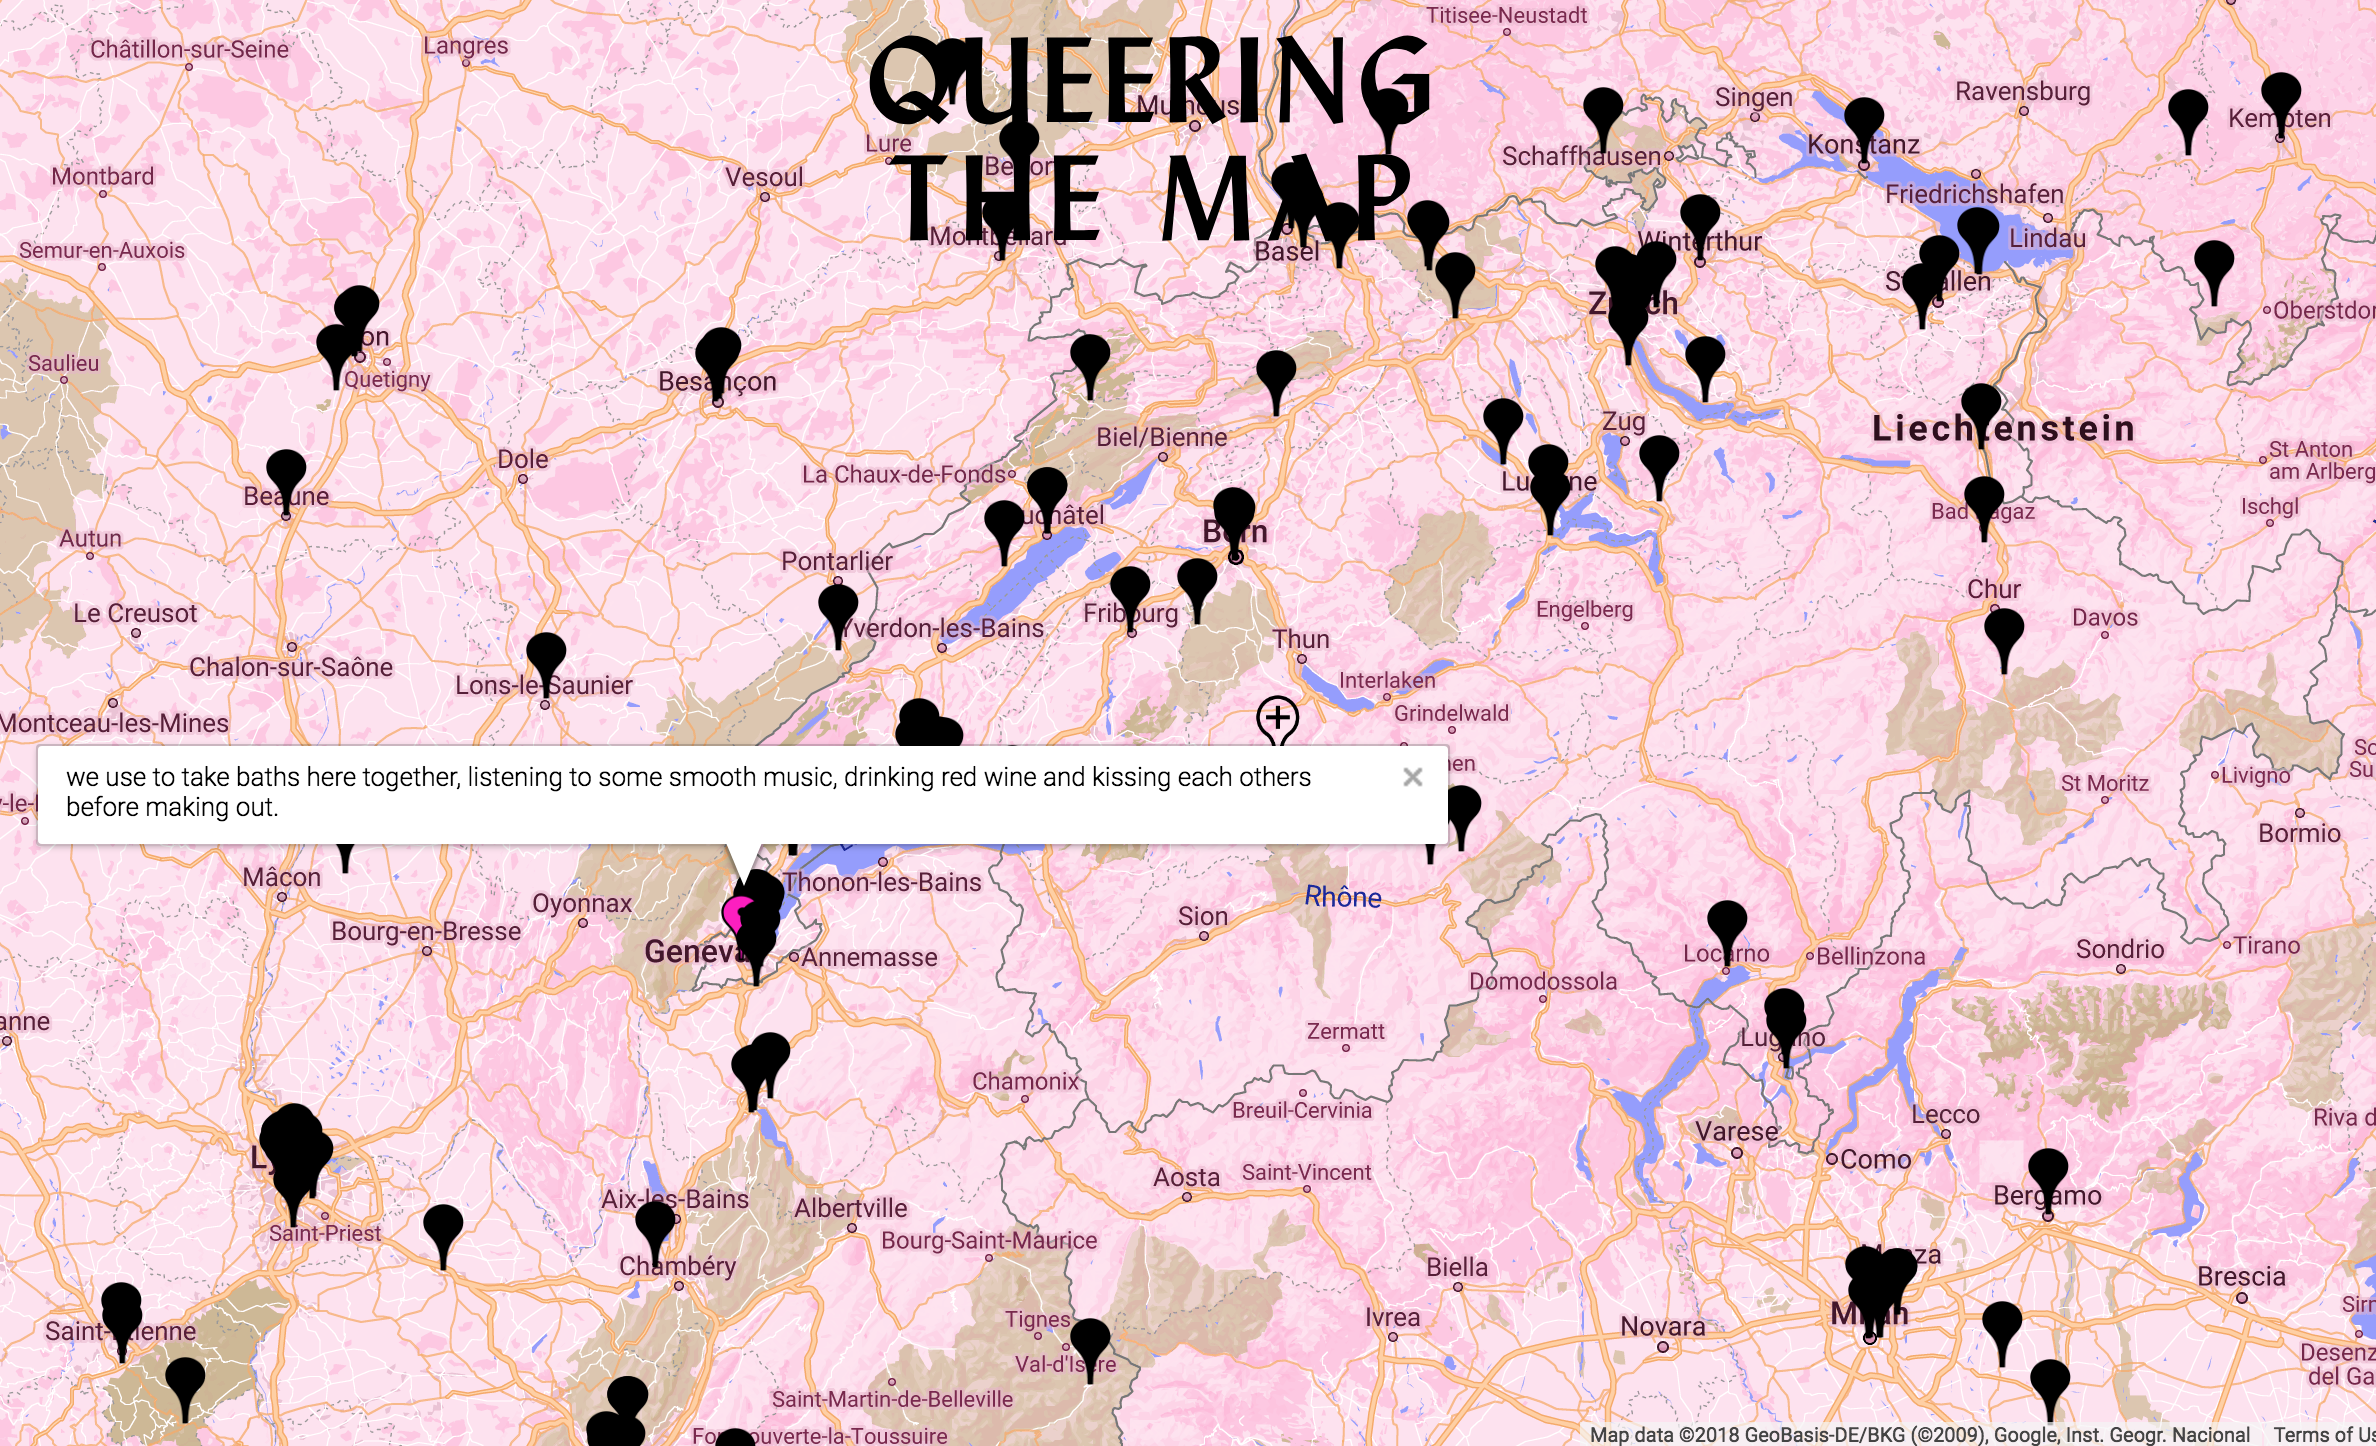 Capture d'écran du site "Queering the map". [Queering the map]